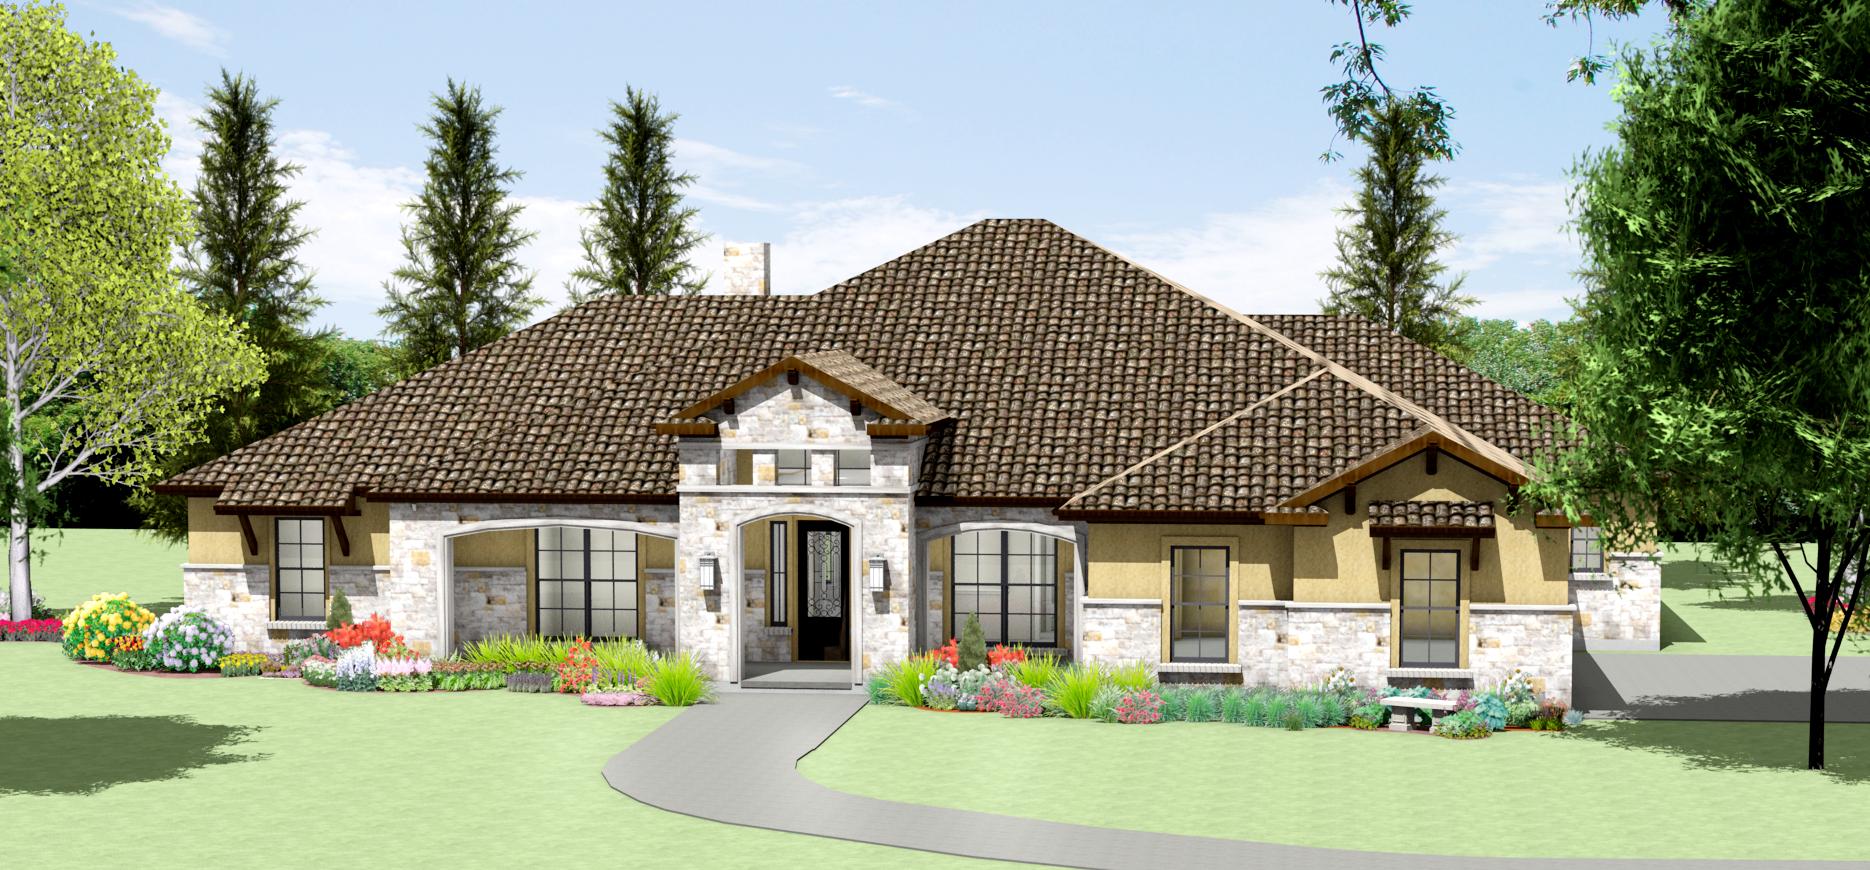 S3450R Texas Tuscan Design | Texas House Plans - Over 700 Proven Home